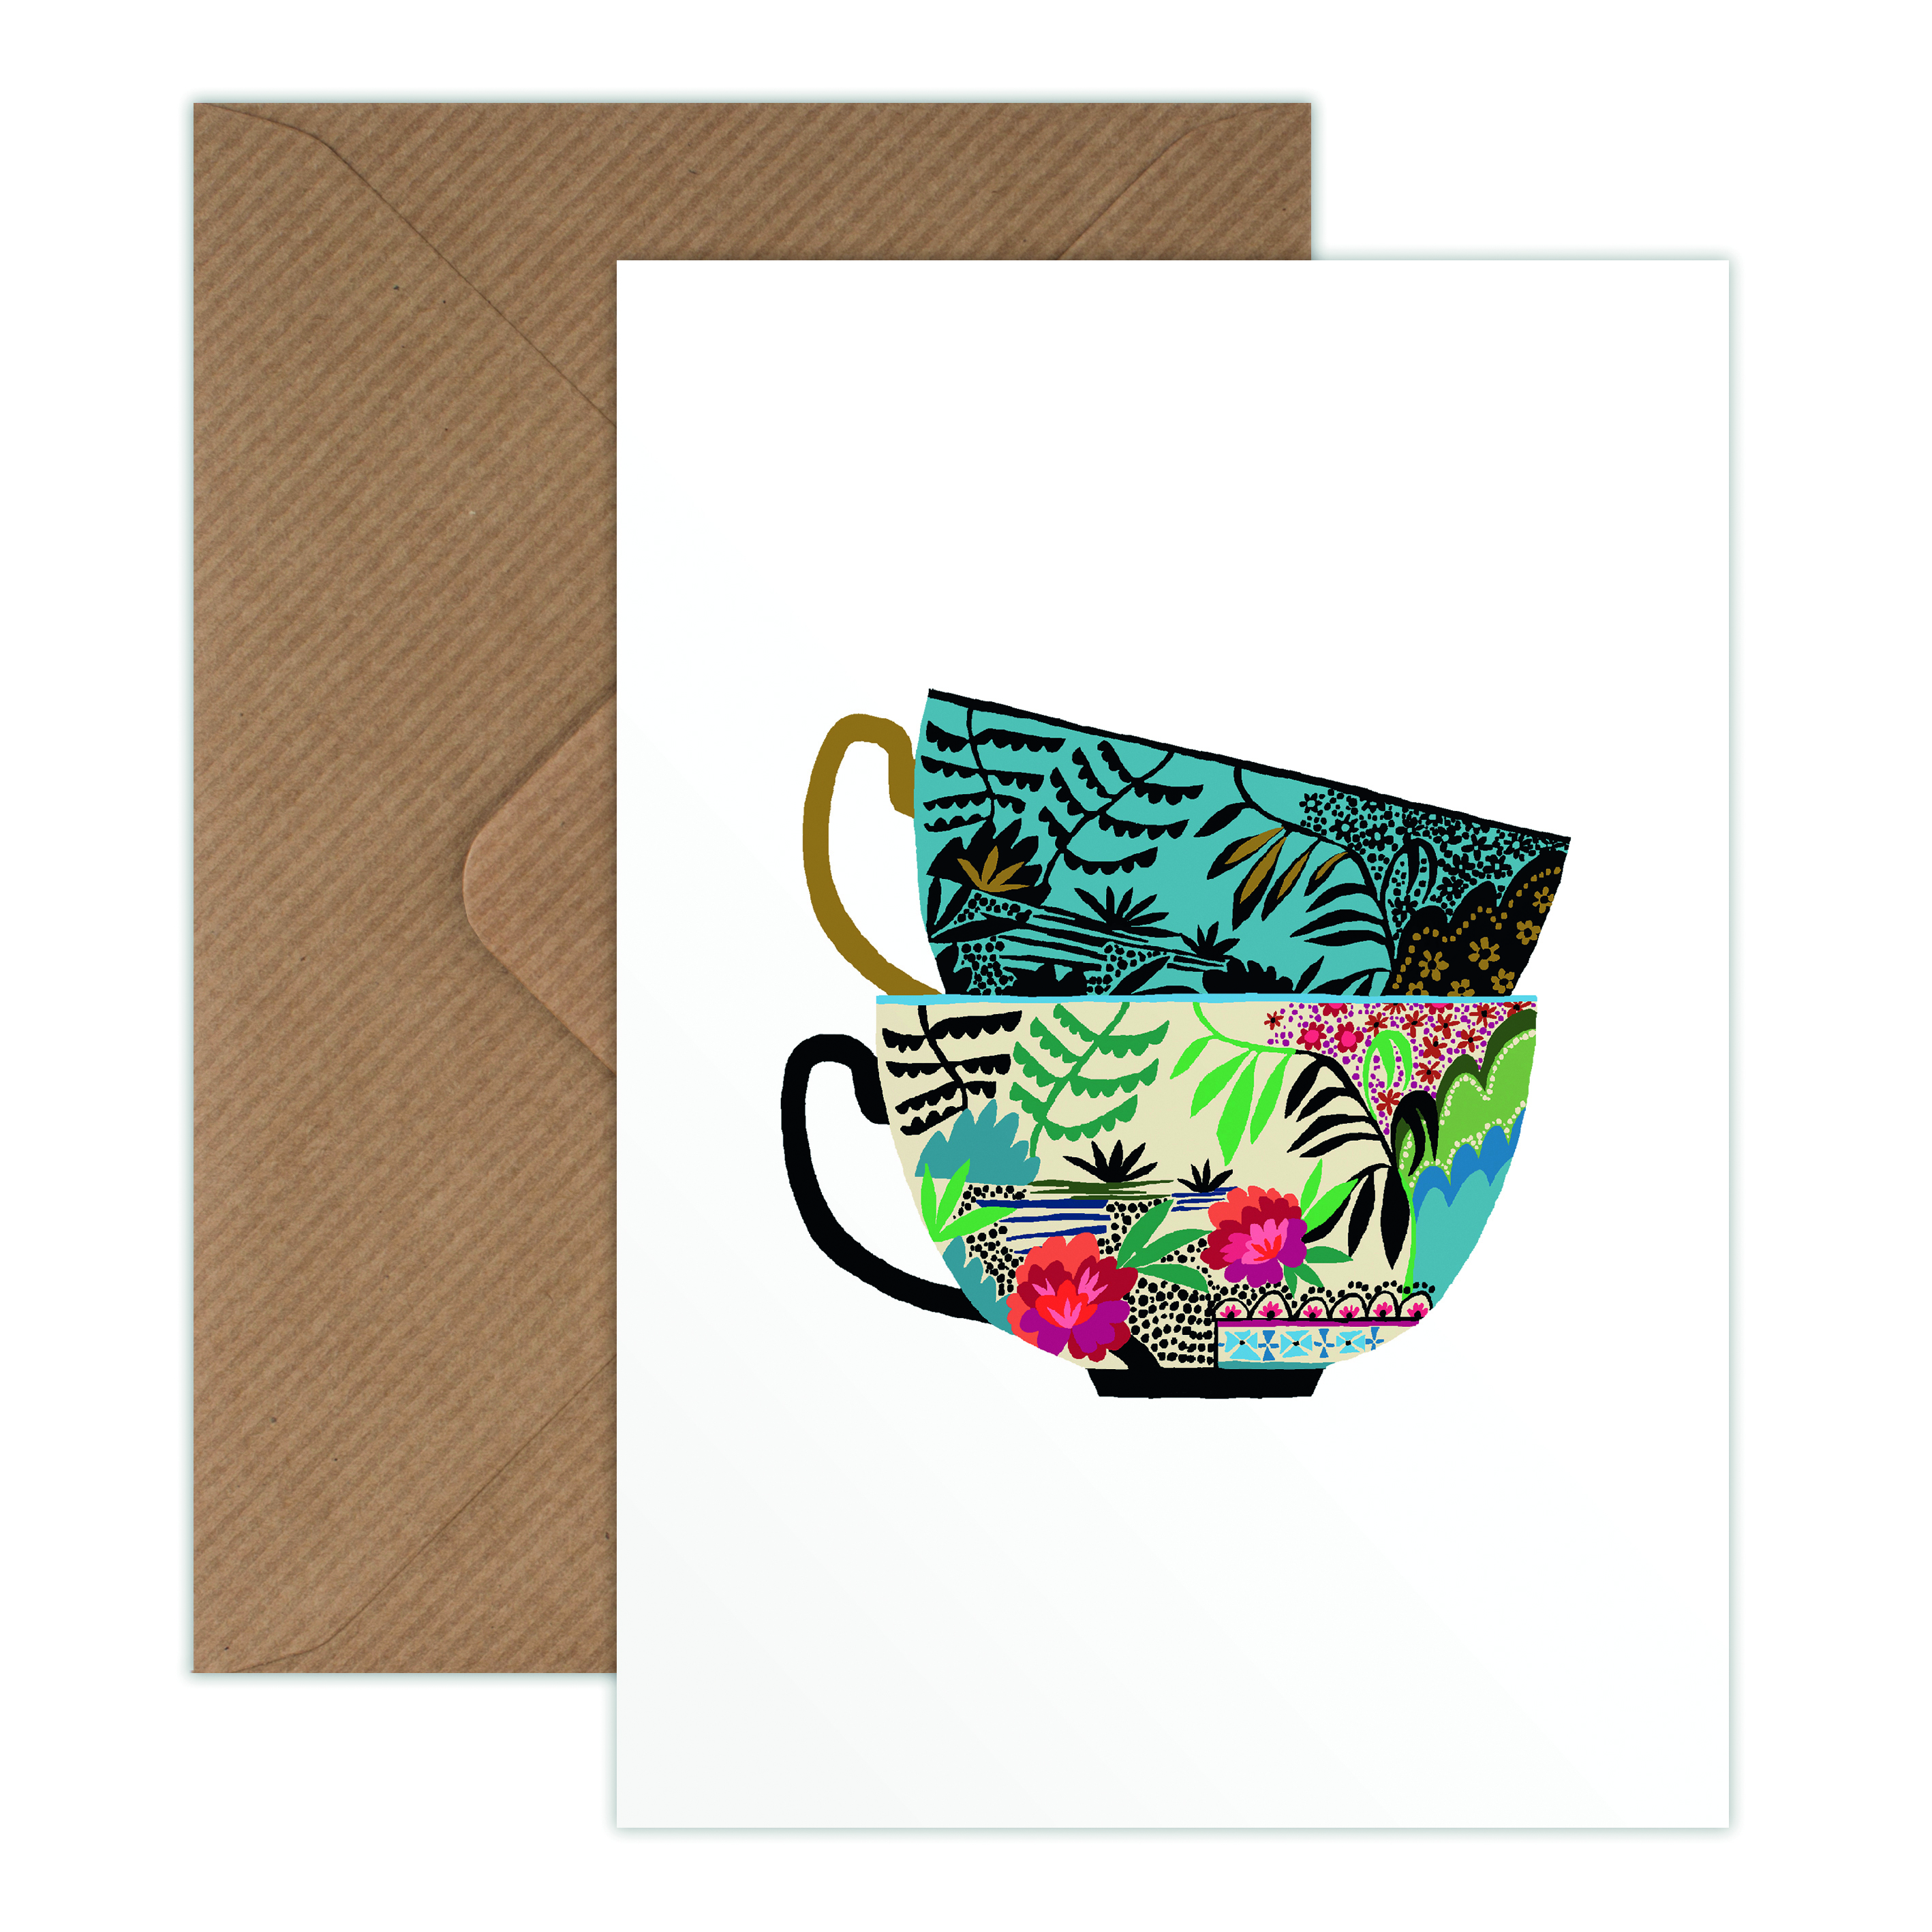 Above: Brie Harrison’s gorgeous teacups design.